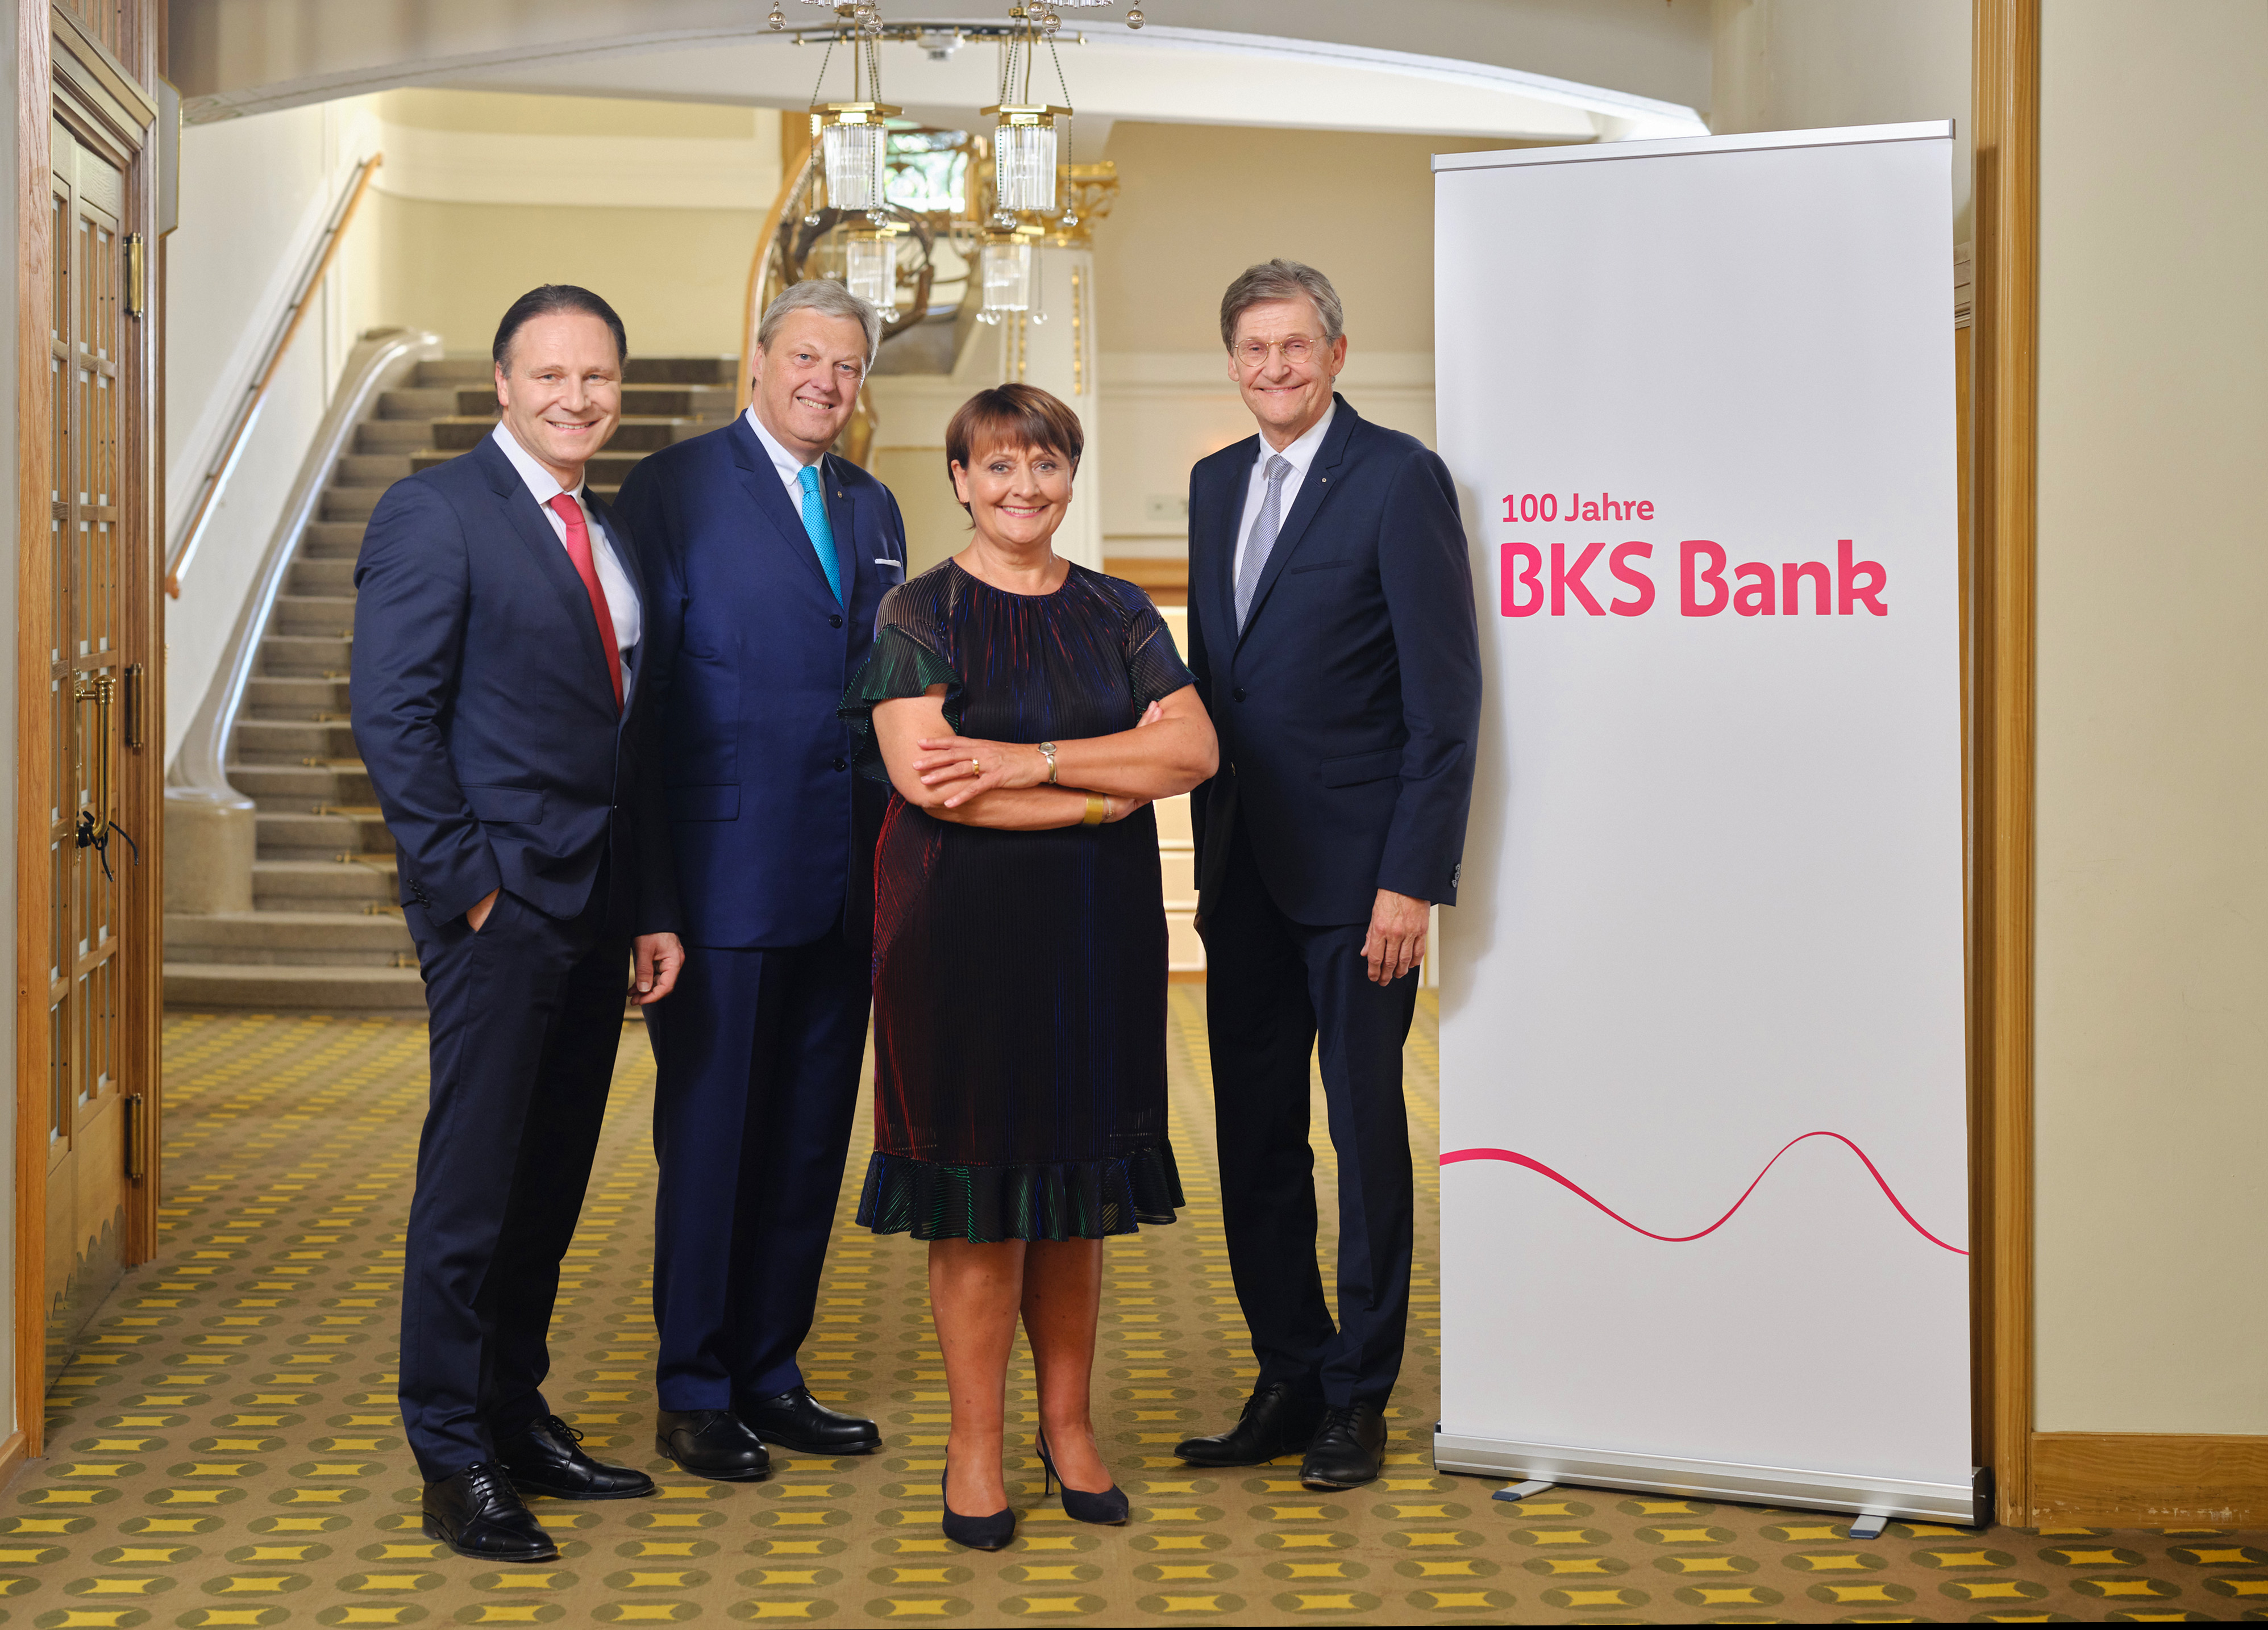 <h2>BKS Bank feiert<strong> 100 Jahre Nähe und Verantwortung  </strong></h2>